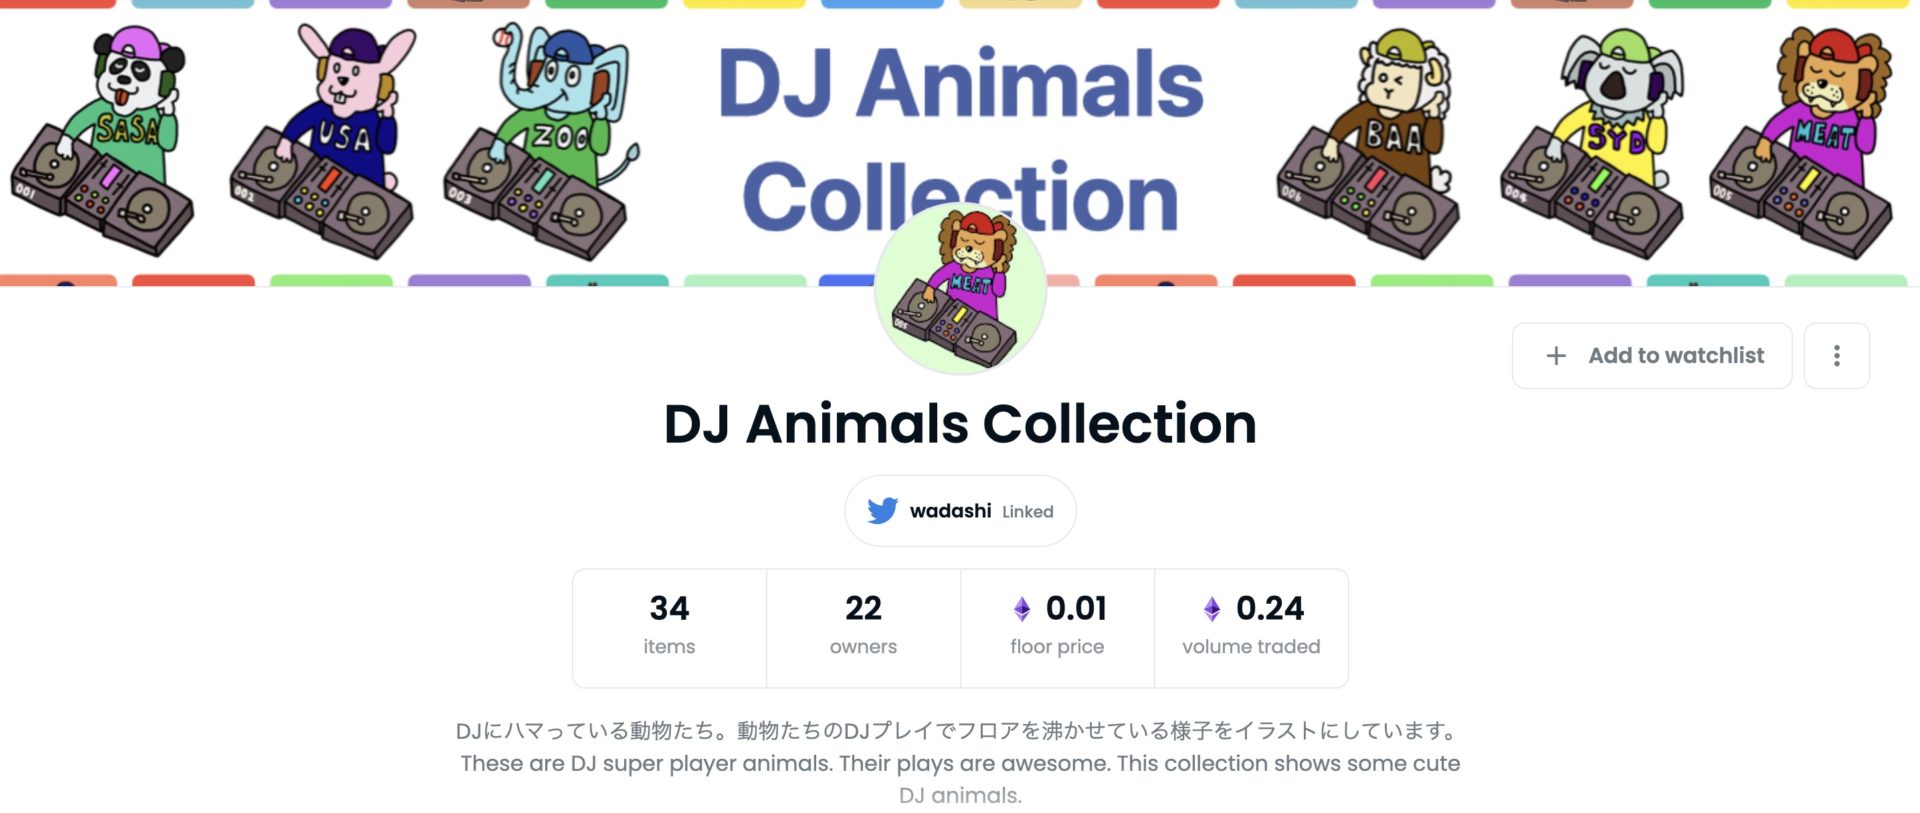 DJ animals collection